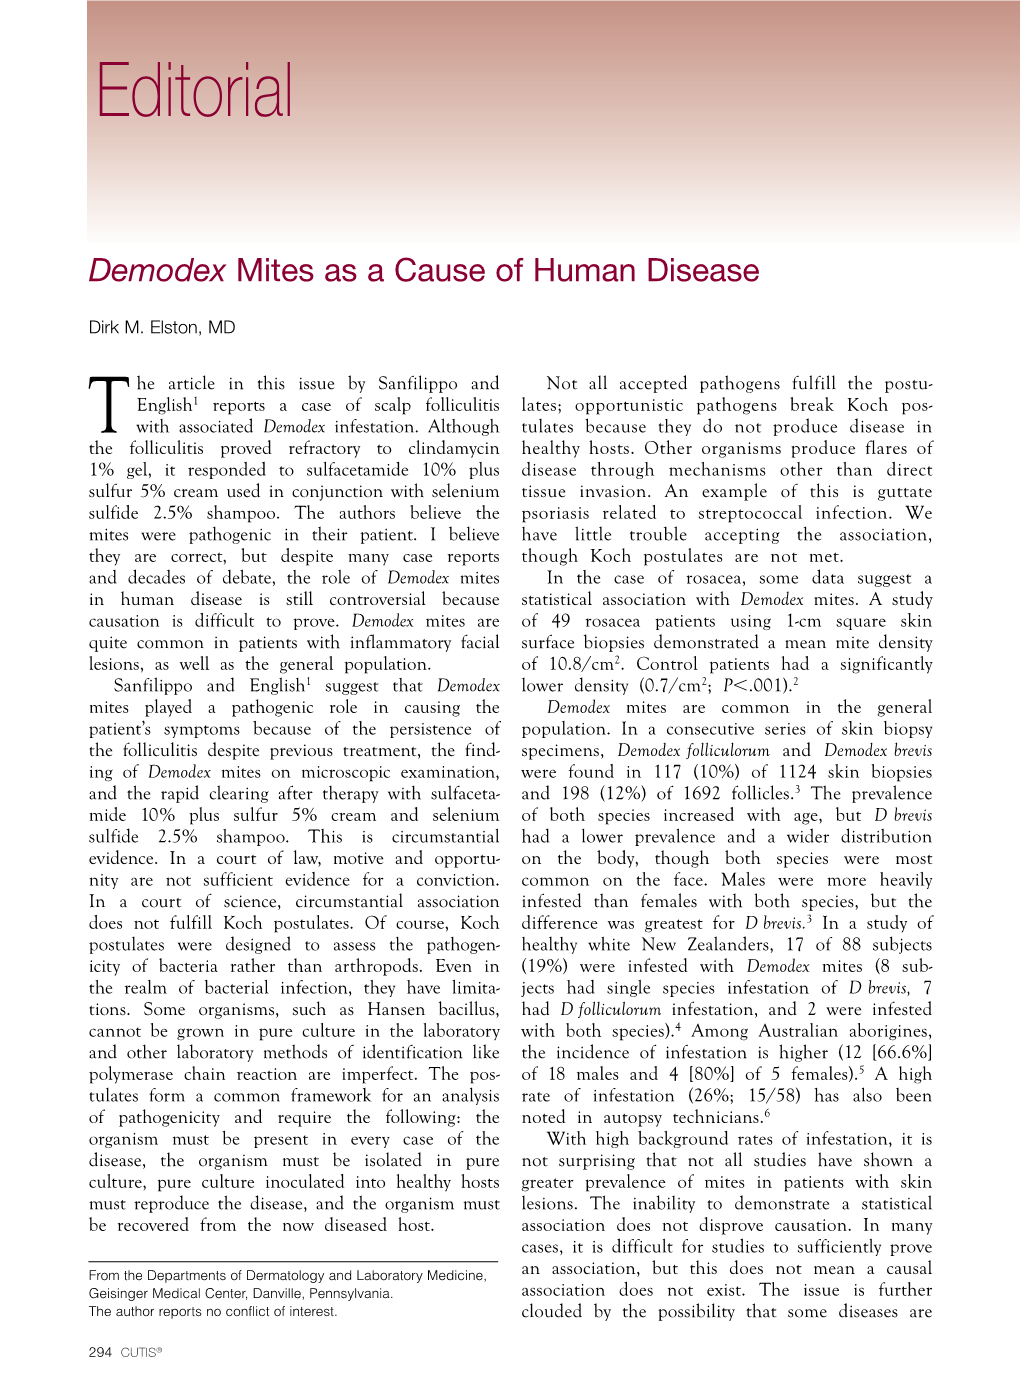 Demodex Mites As a Cause of Human Disease